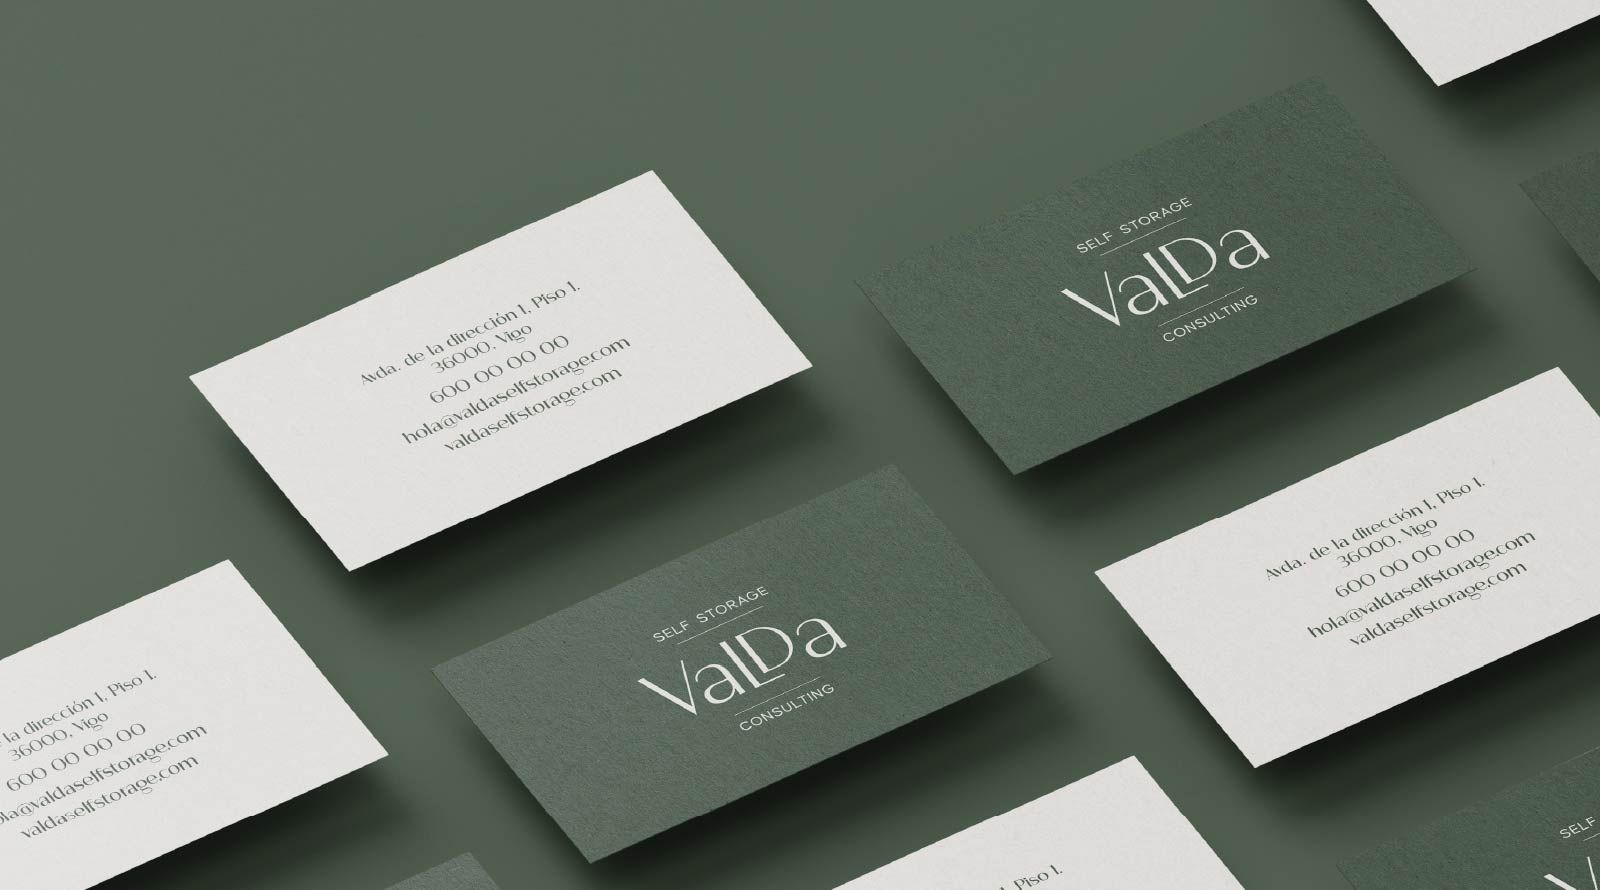 Valda Self Storage - Diseño de Imagen Corporativa - Vigo